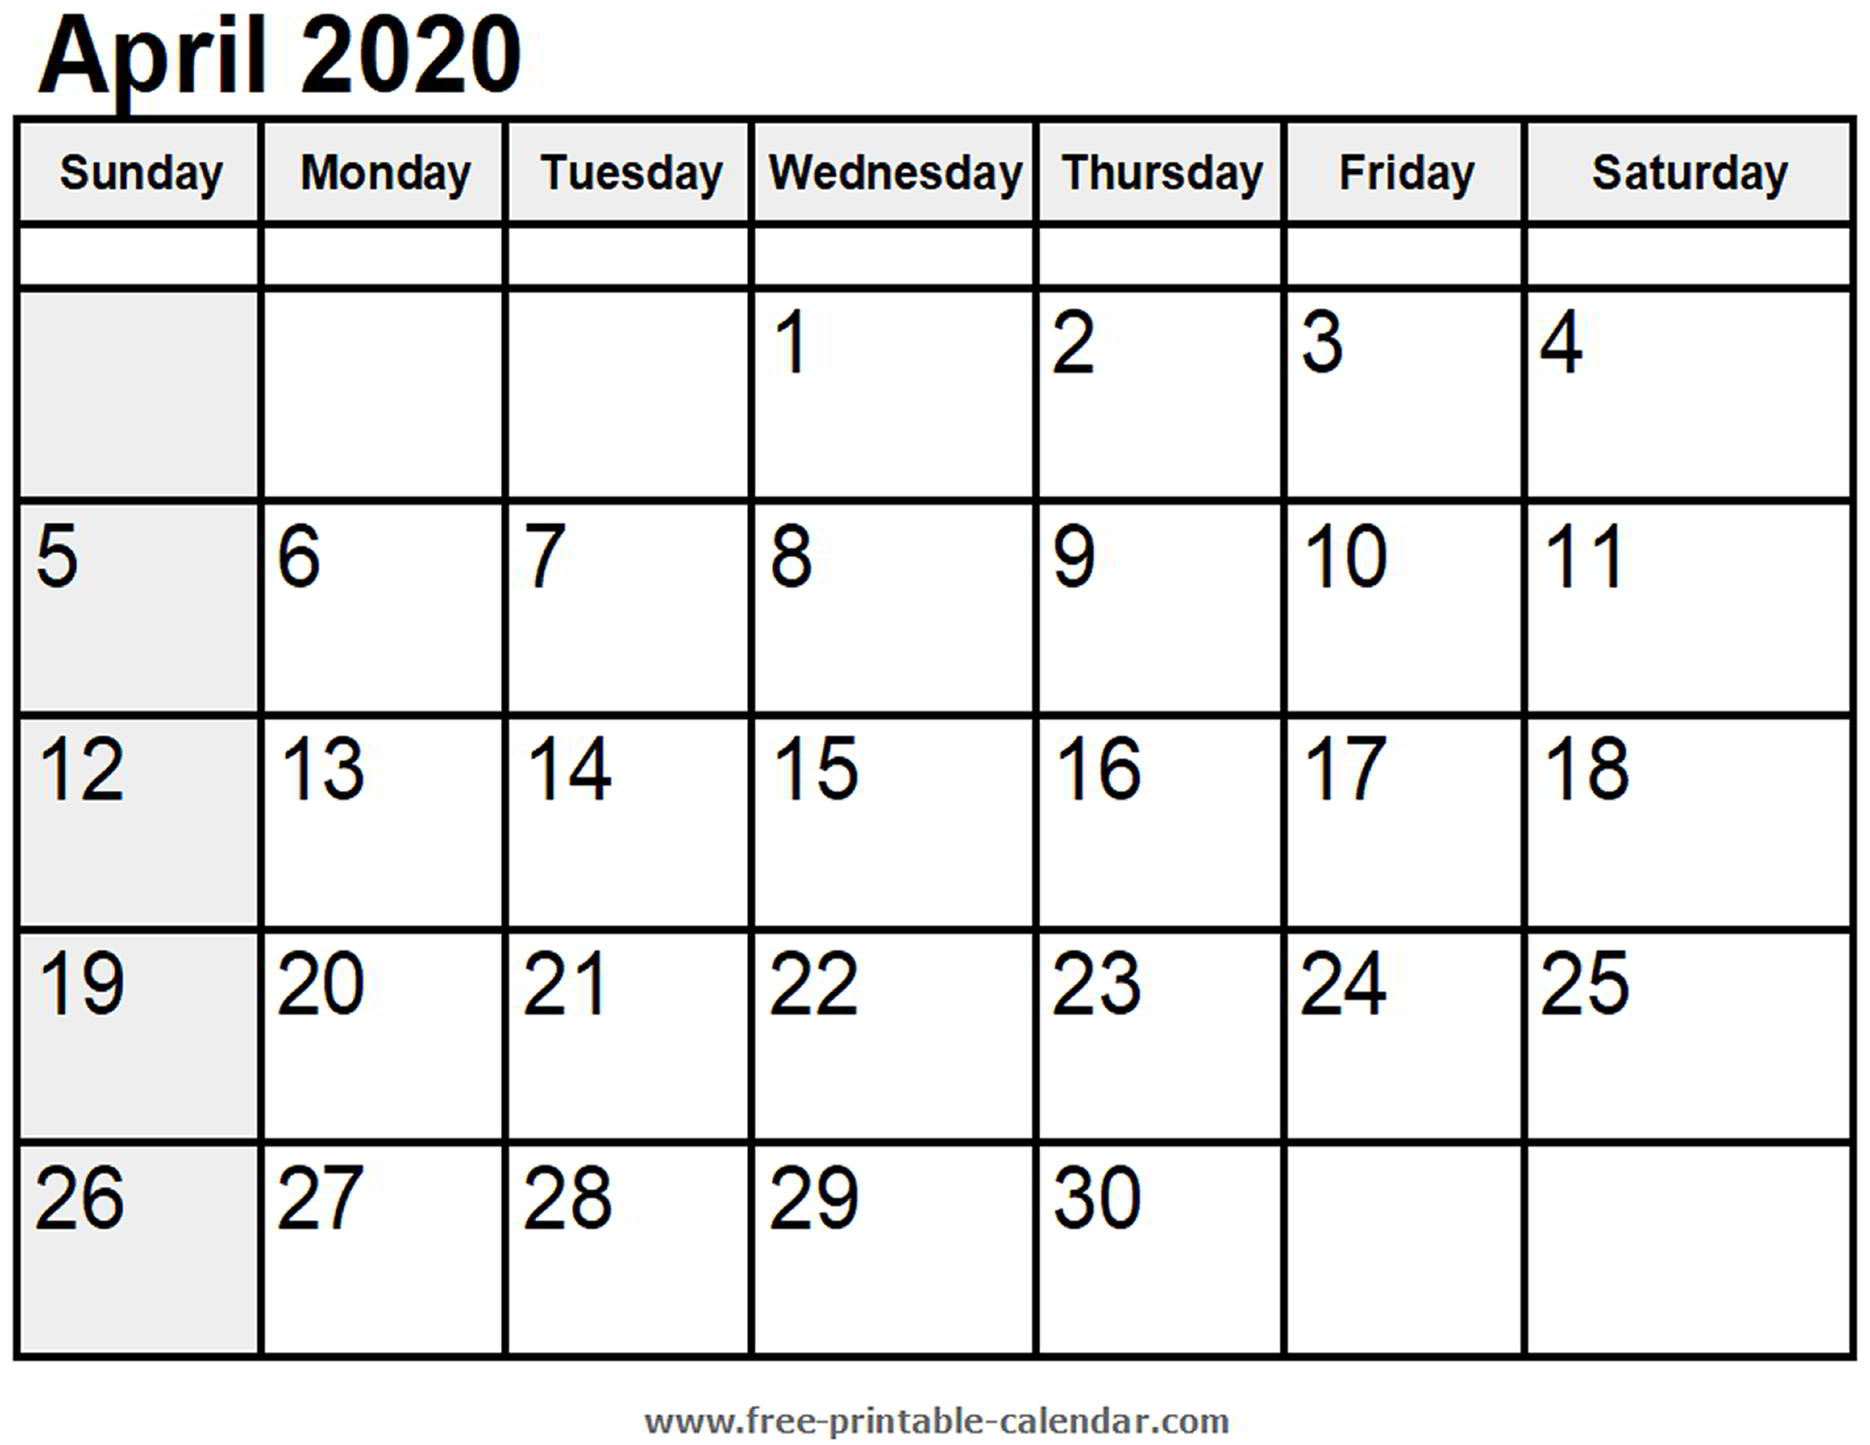 Calendar April 2020 - Free-Printable-Calendar